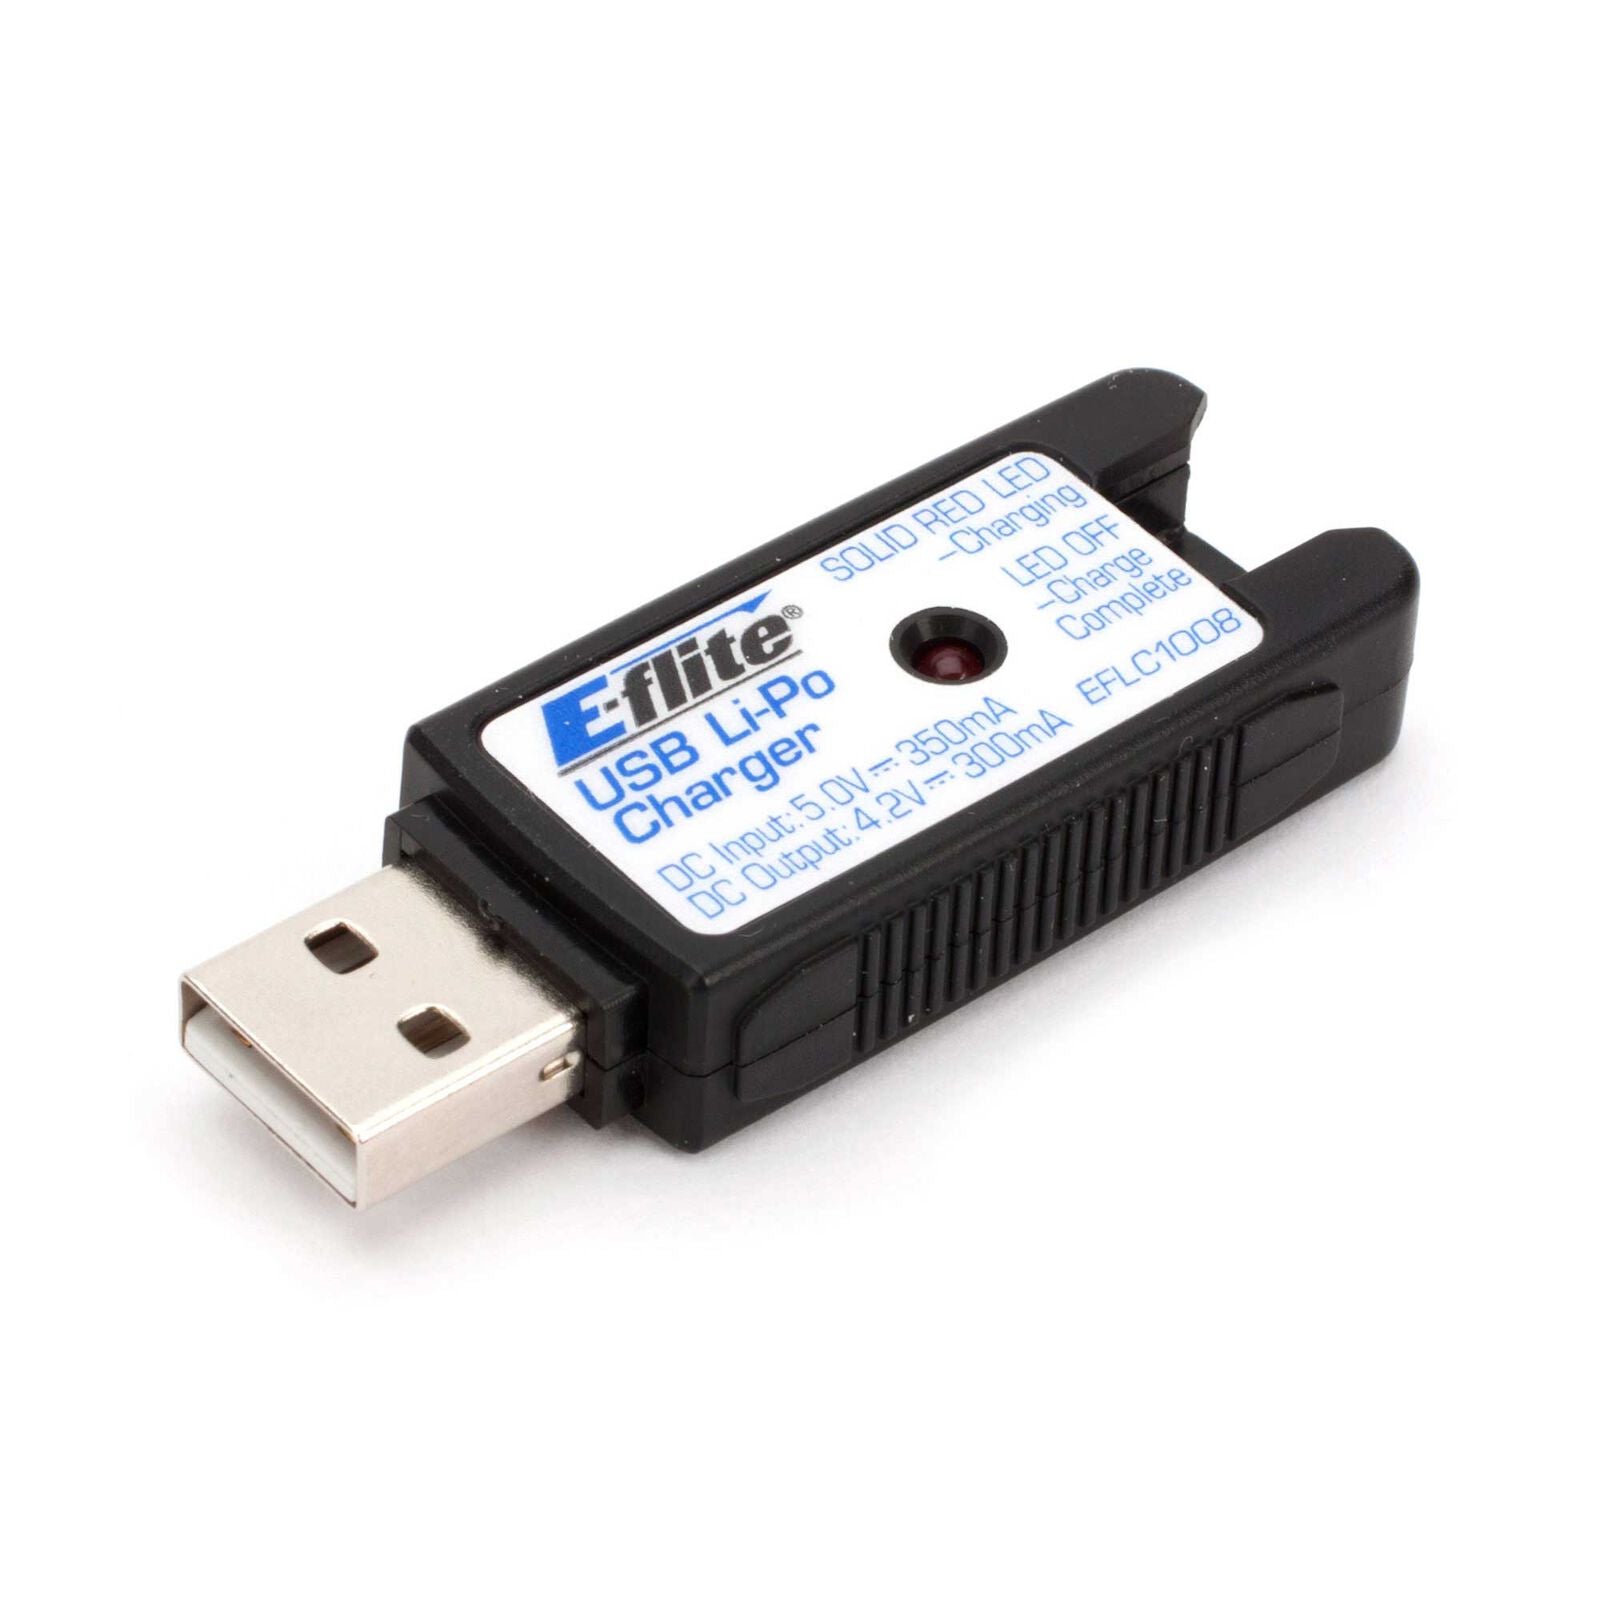 EFLITE EFLC1008 1S USB LiPo Charger, 300mA